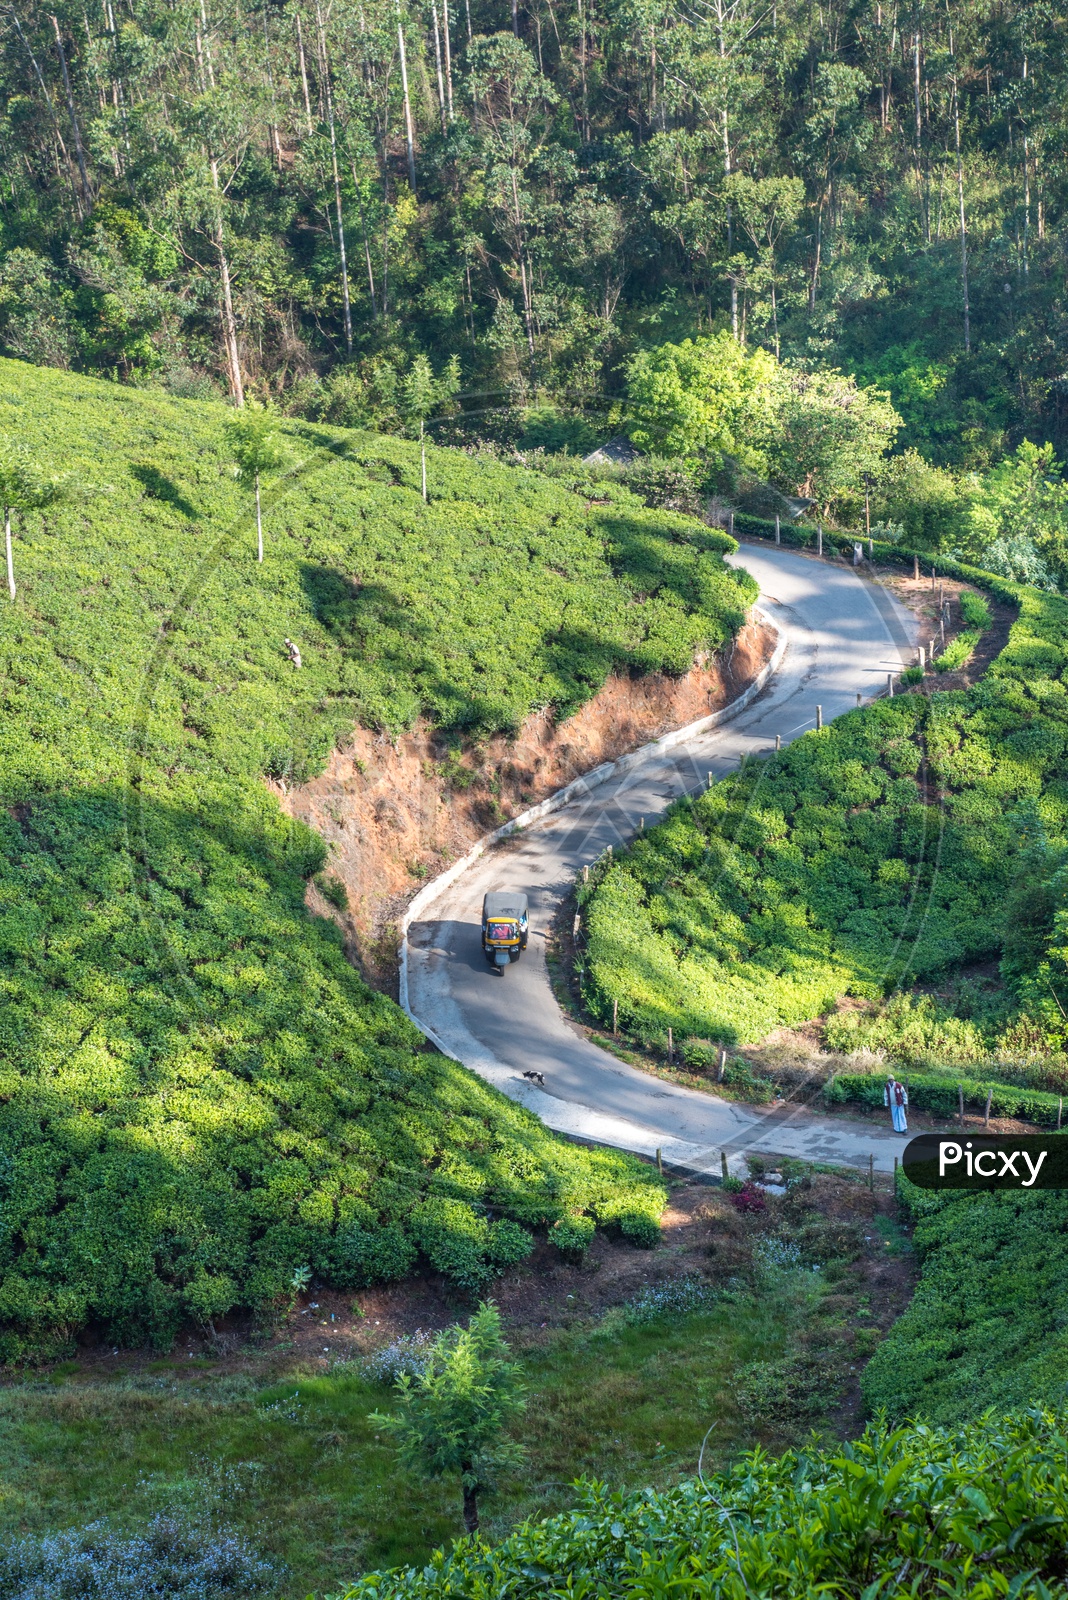 An Auto cruising through the passage ways between the Tea Plantations, Munnar.